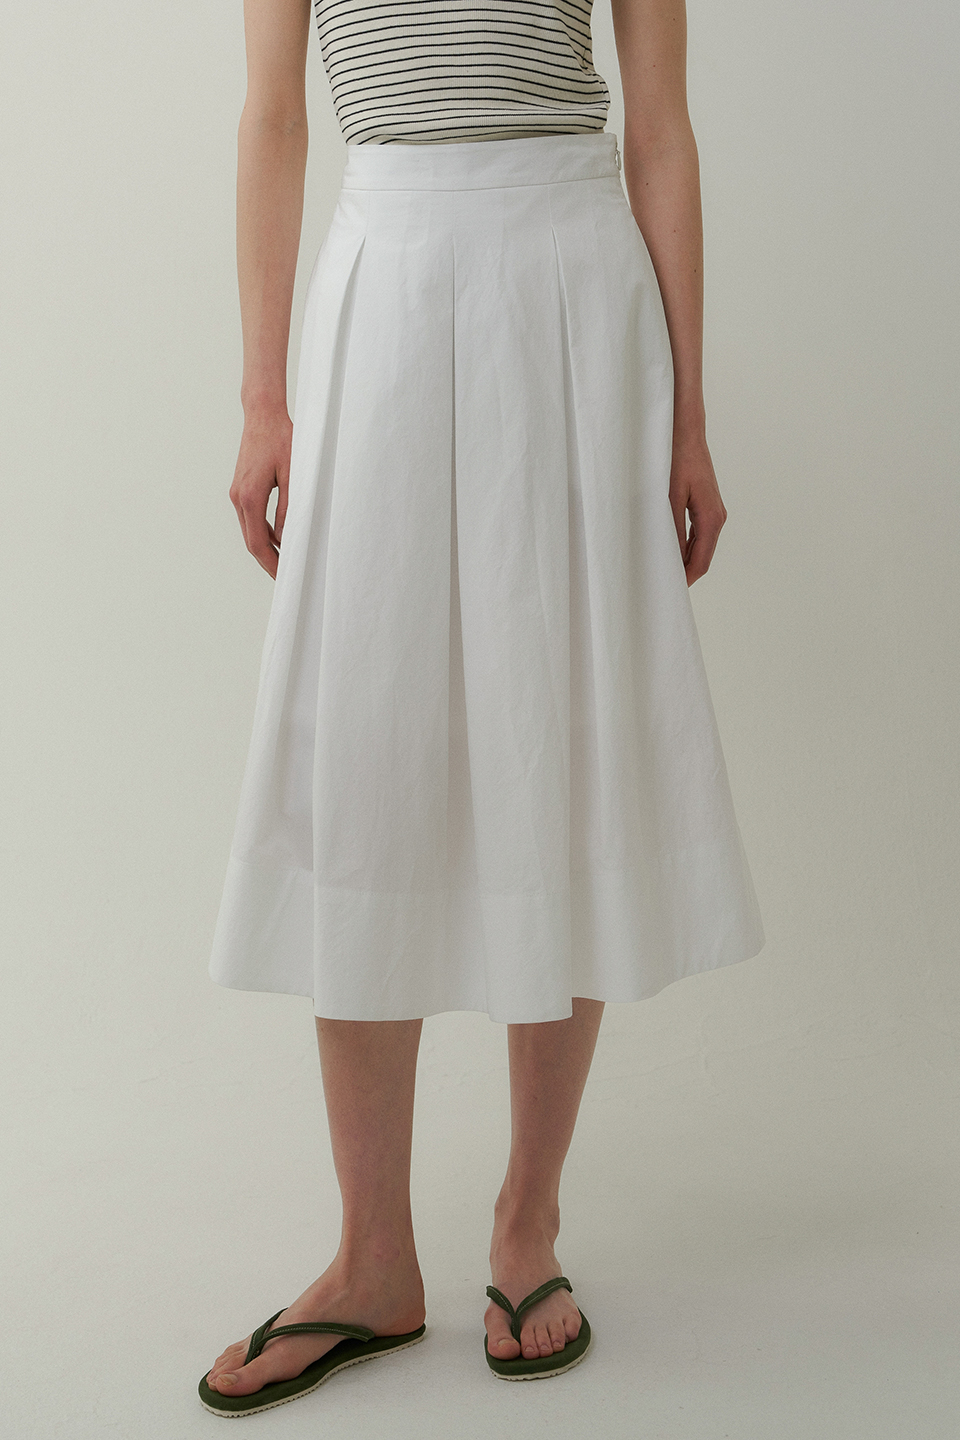 cotton pleats skirt (white)